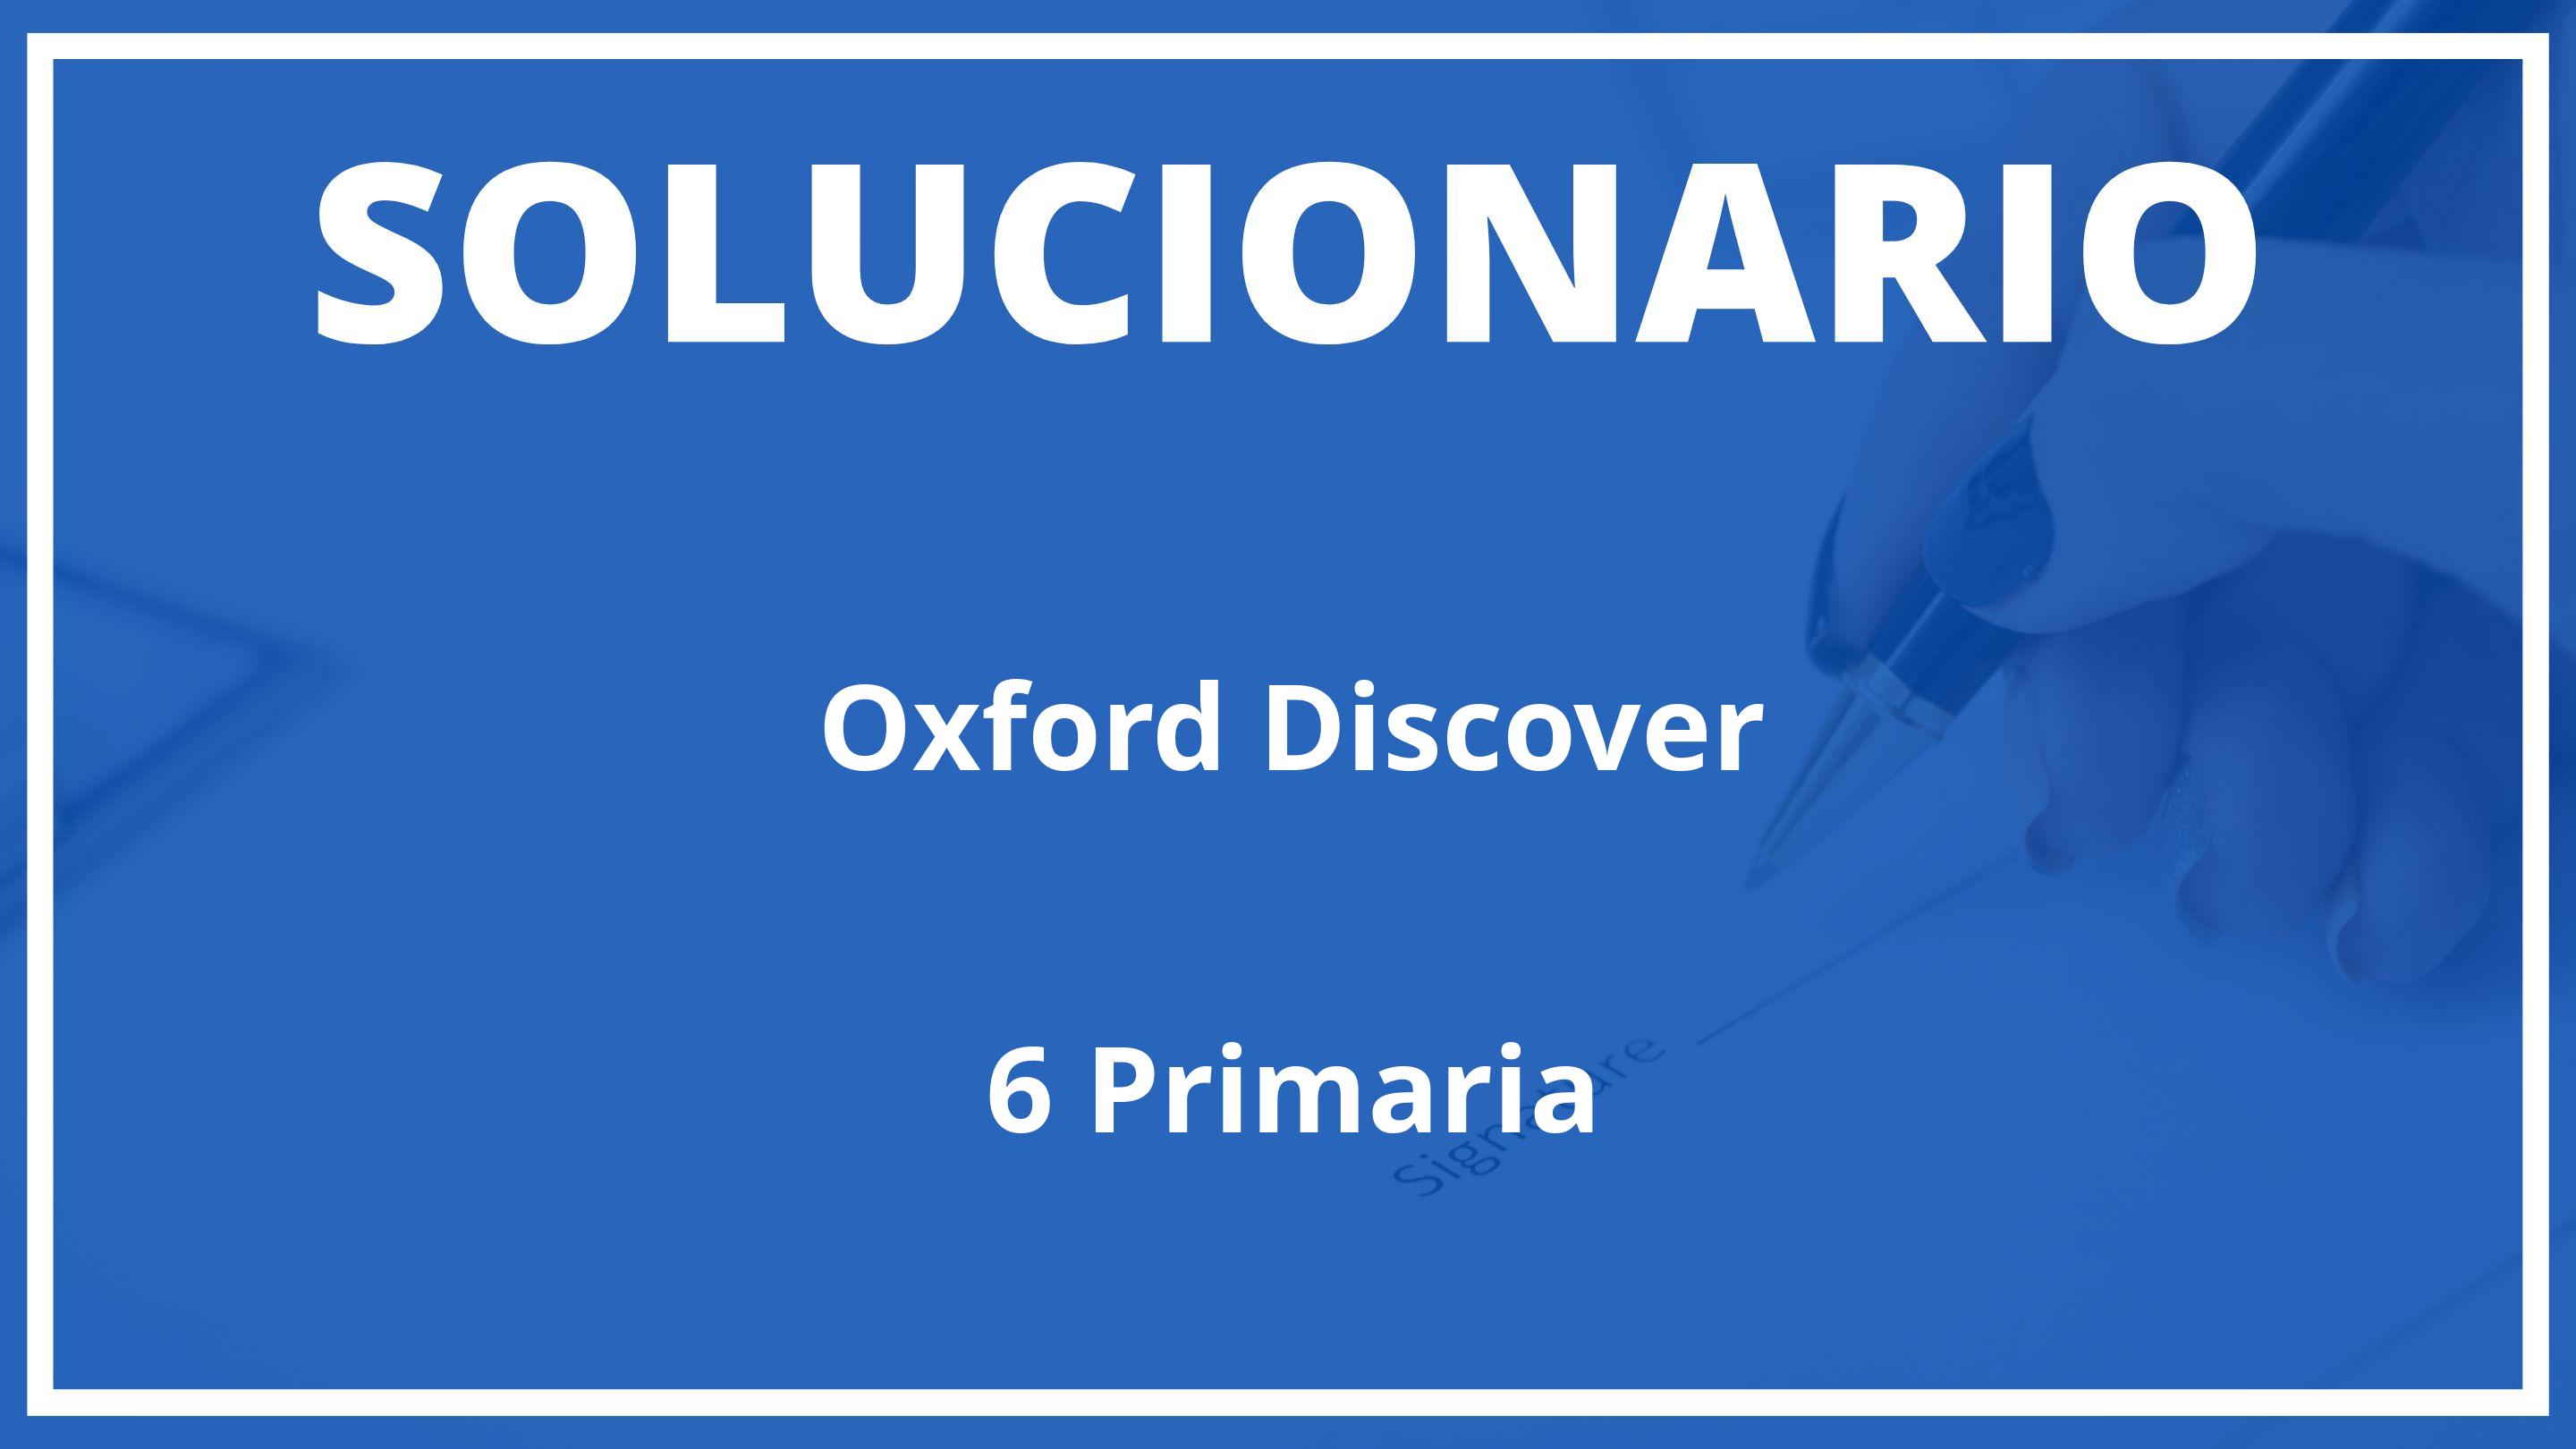 Solucionario Oxford Discover  Oxford 6 Primaria